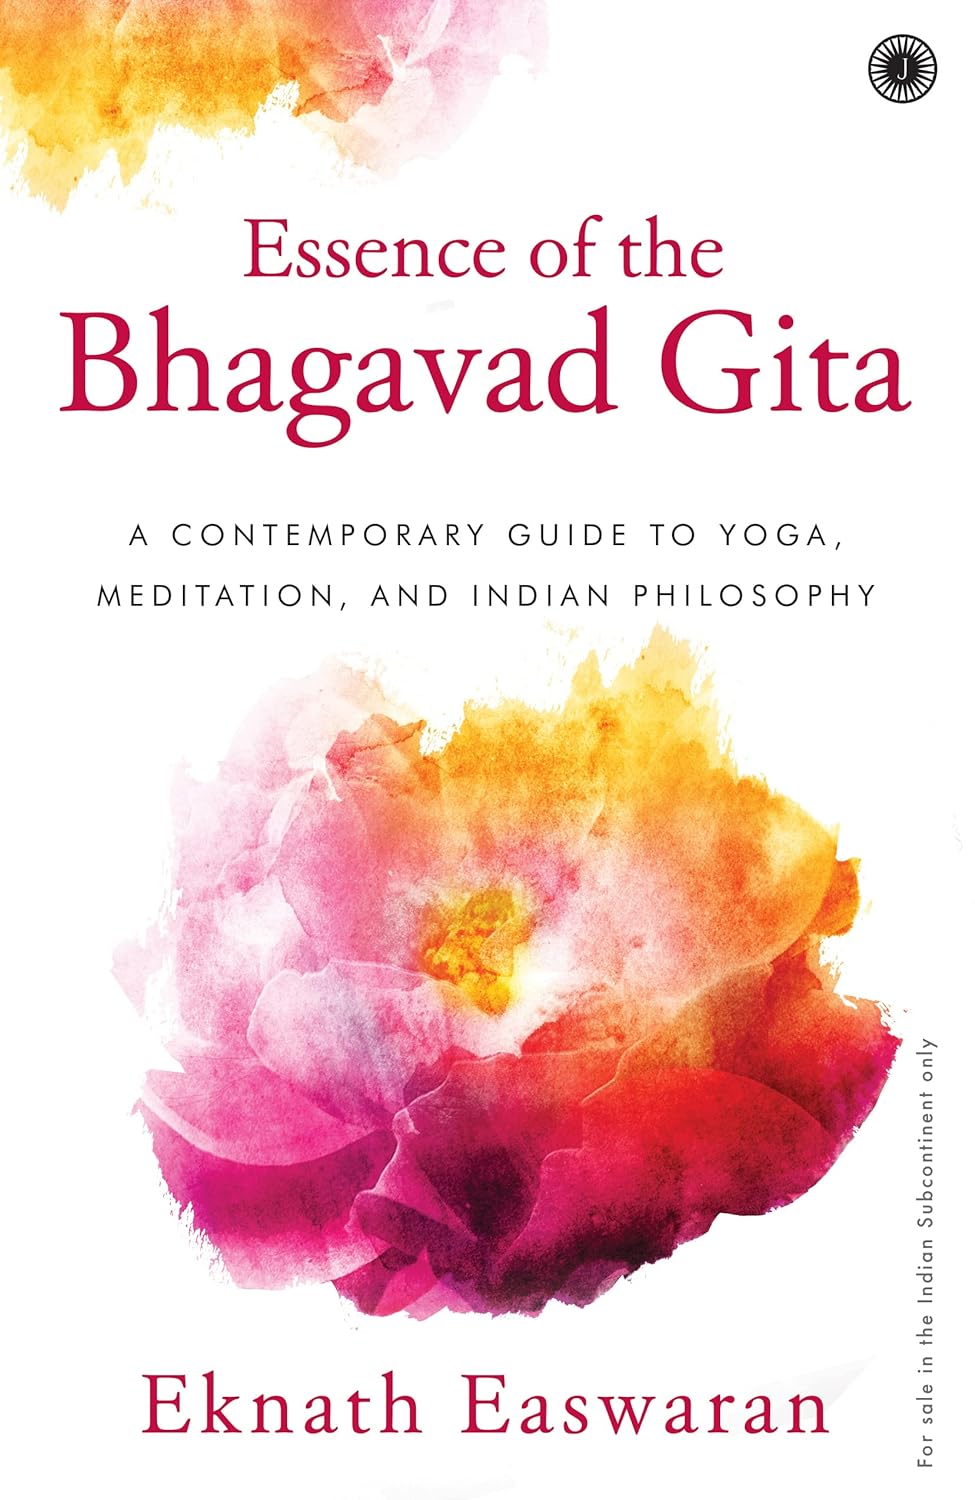 ESSENCE OF THE BHAGAVAD GITA